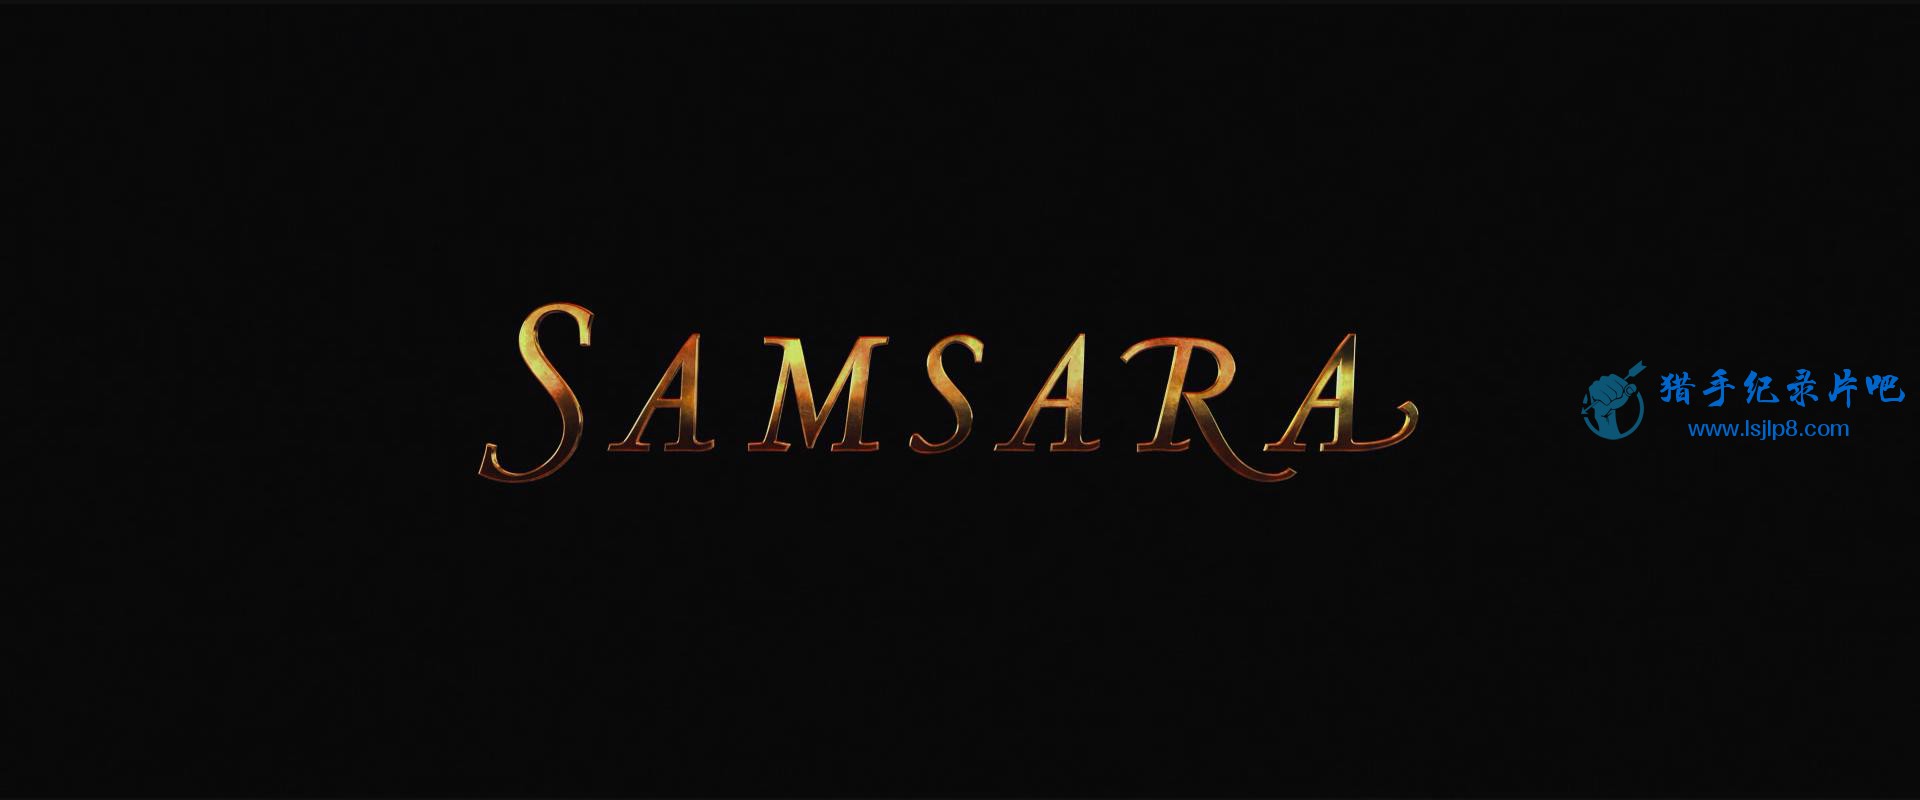 Samsara (2011) 1080p 5.1ch BRRip AAC x264 - [GeekRG]_20180617132320.JPG